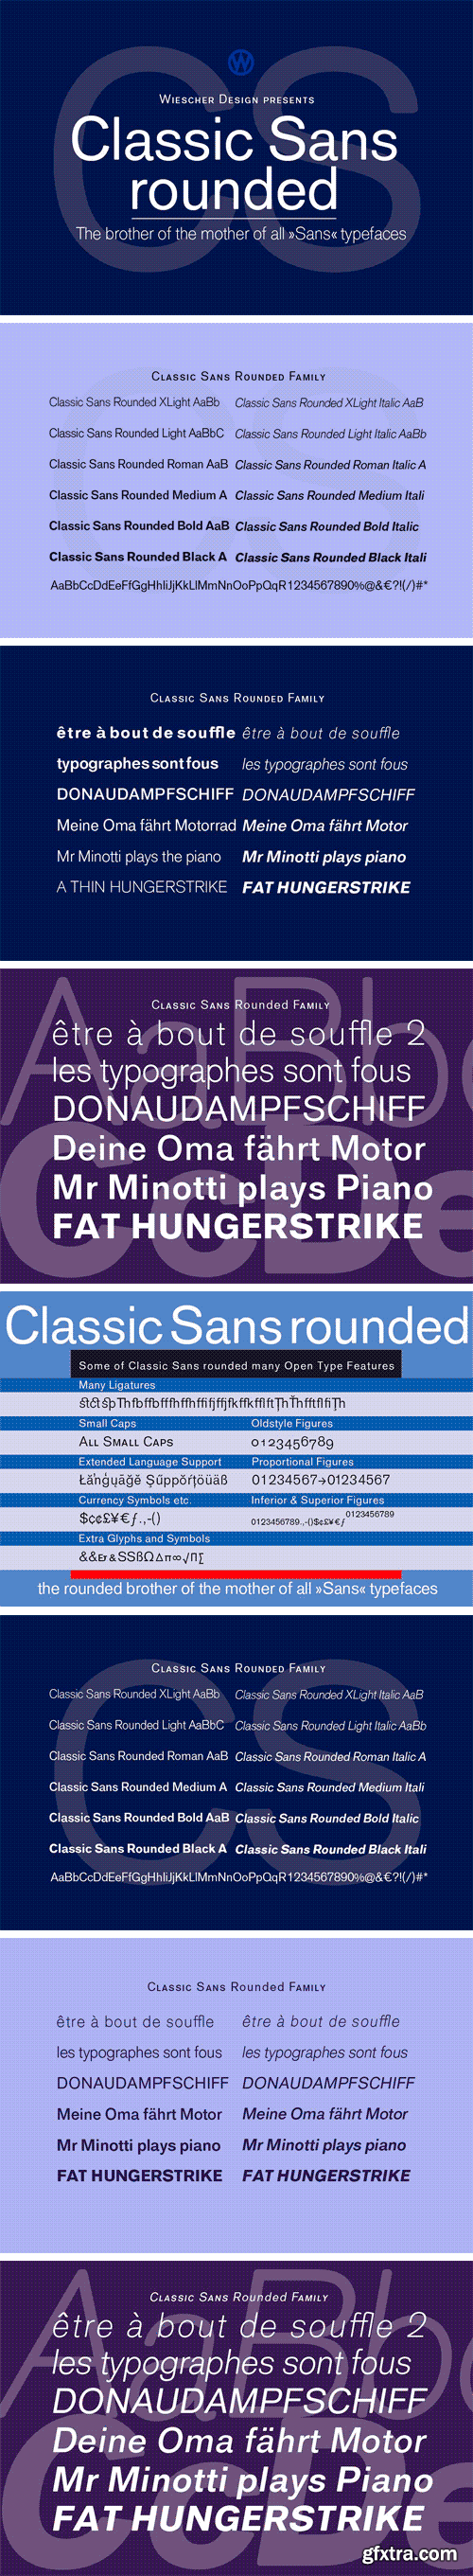 CM - Classic Sans Rounded 2085679